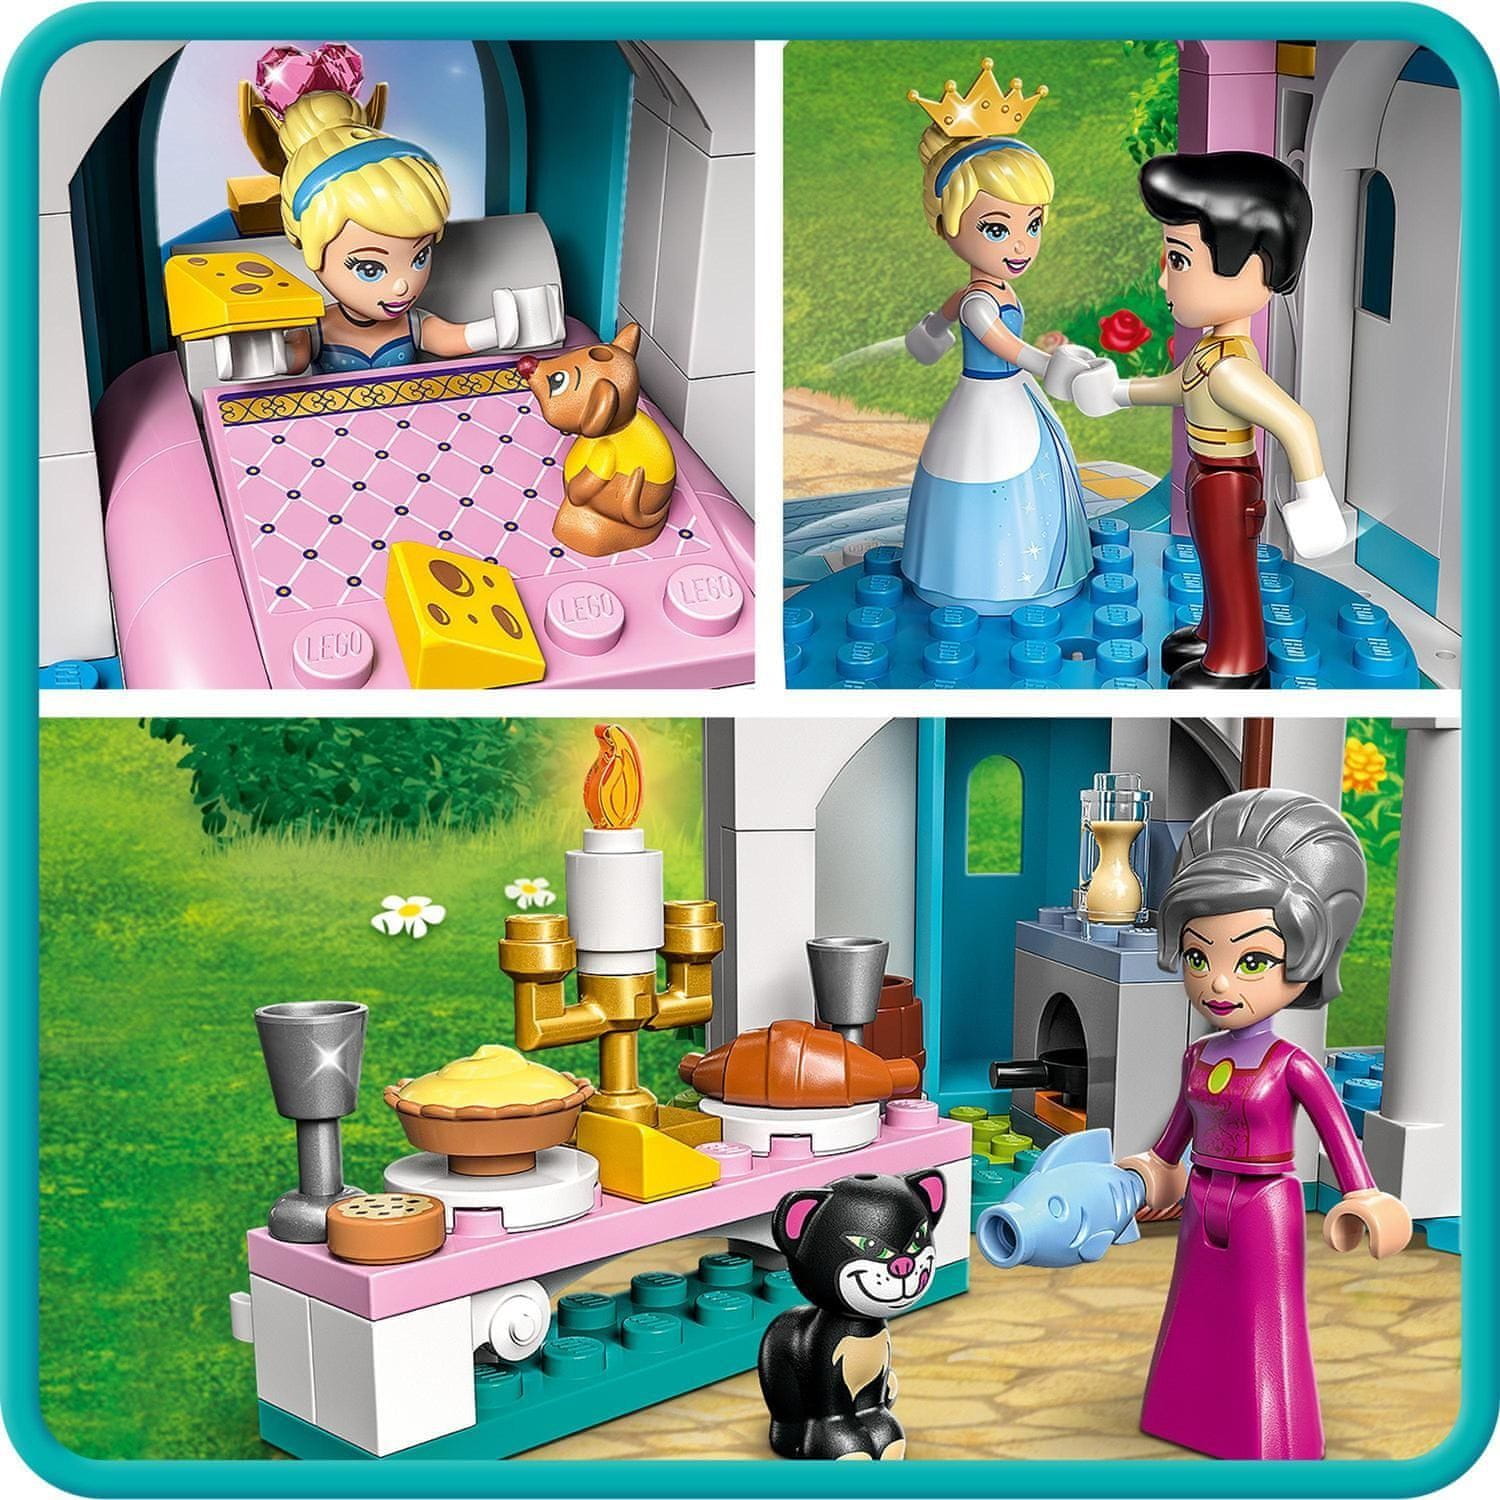 LEGO Disney Princess 43206 Zámek Popelky a krásného prince